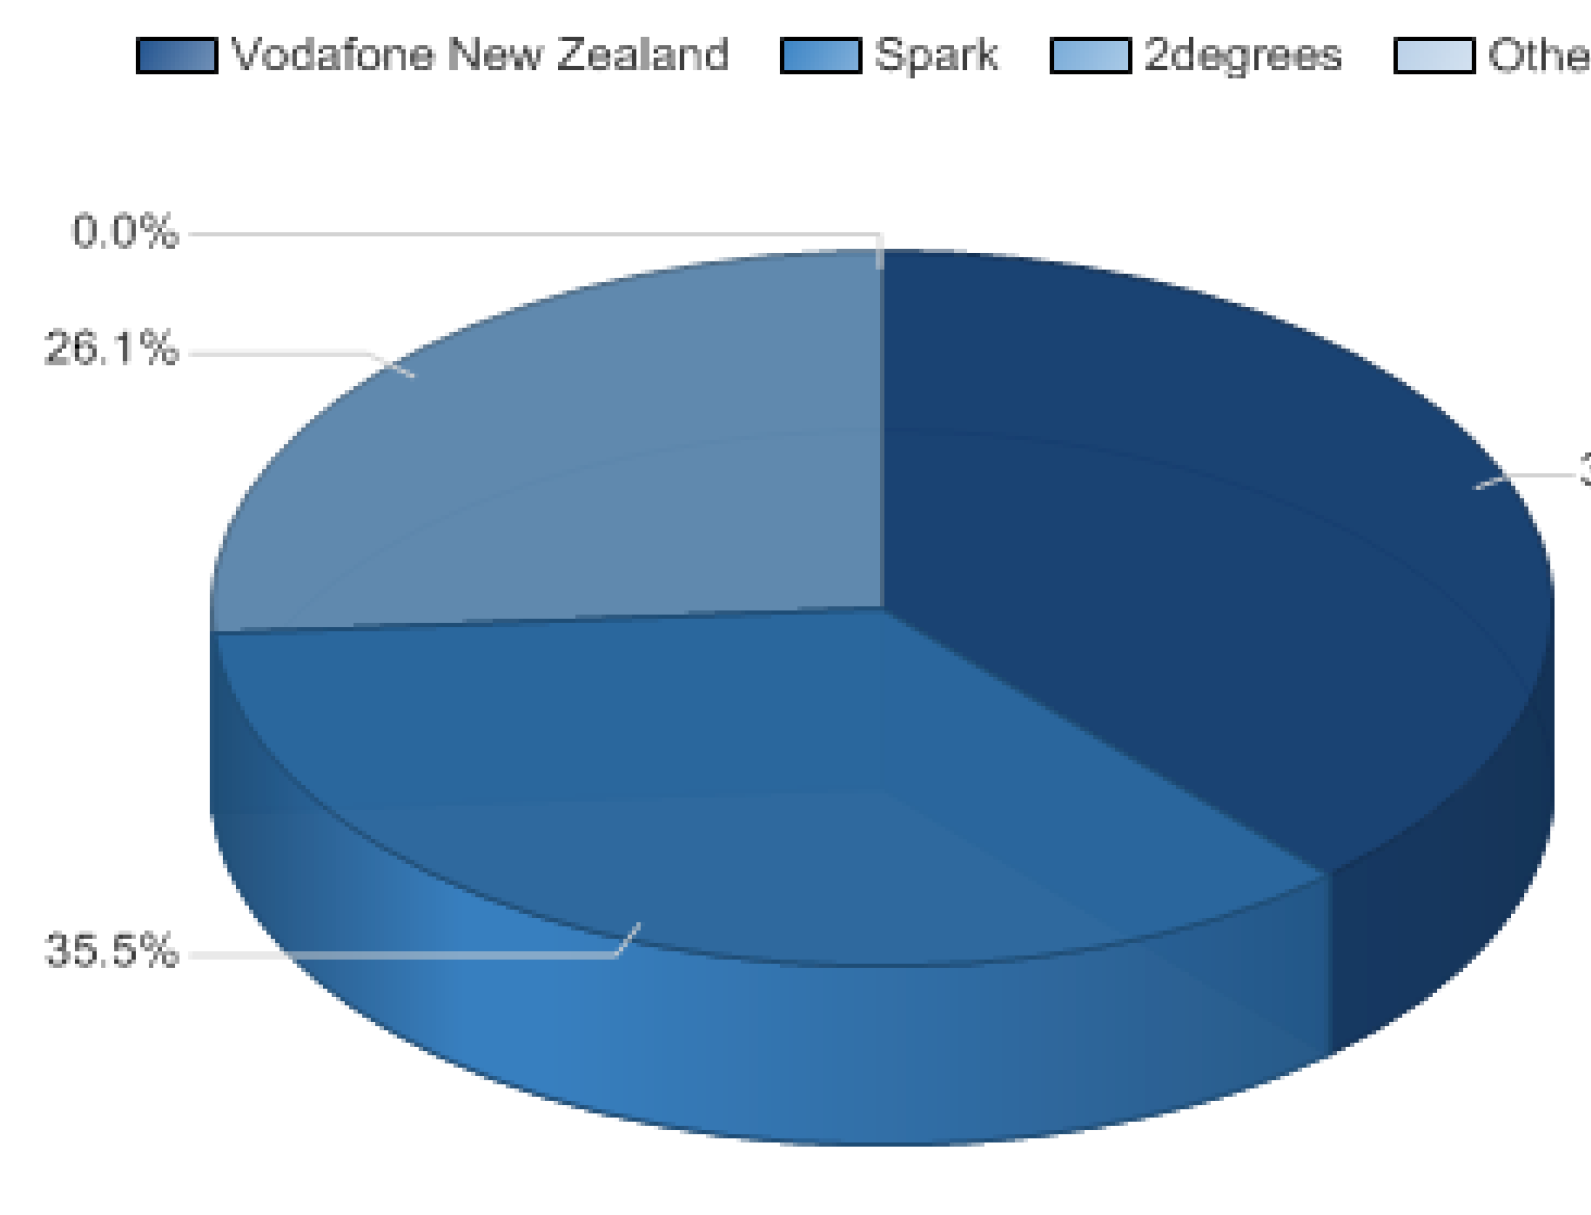  Wireless telecom services market share in NZ